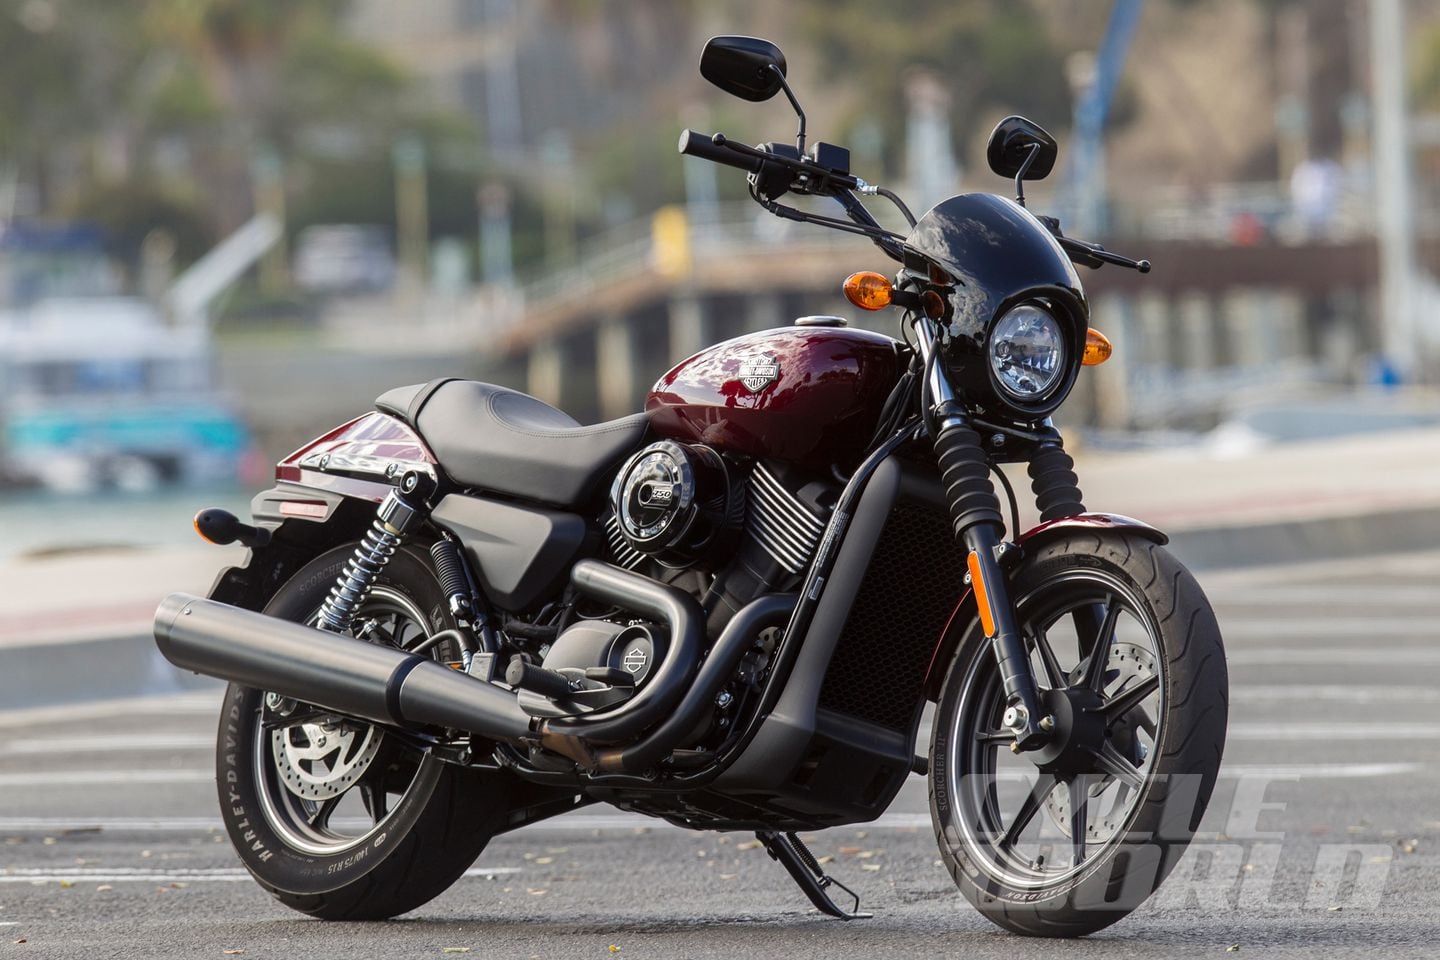 Harley Davidson Street 750 Vs Yamaha Star Bolt Comparison Test Review Cycle World